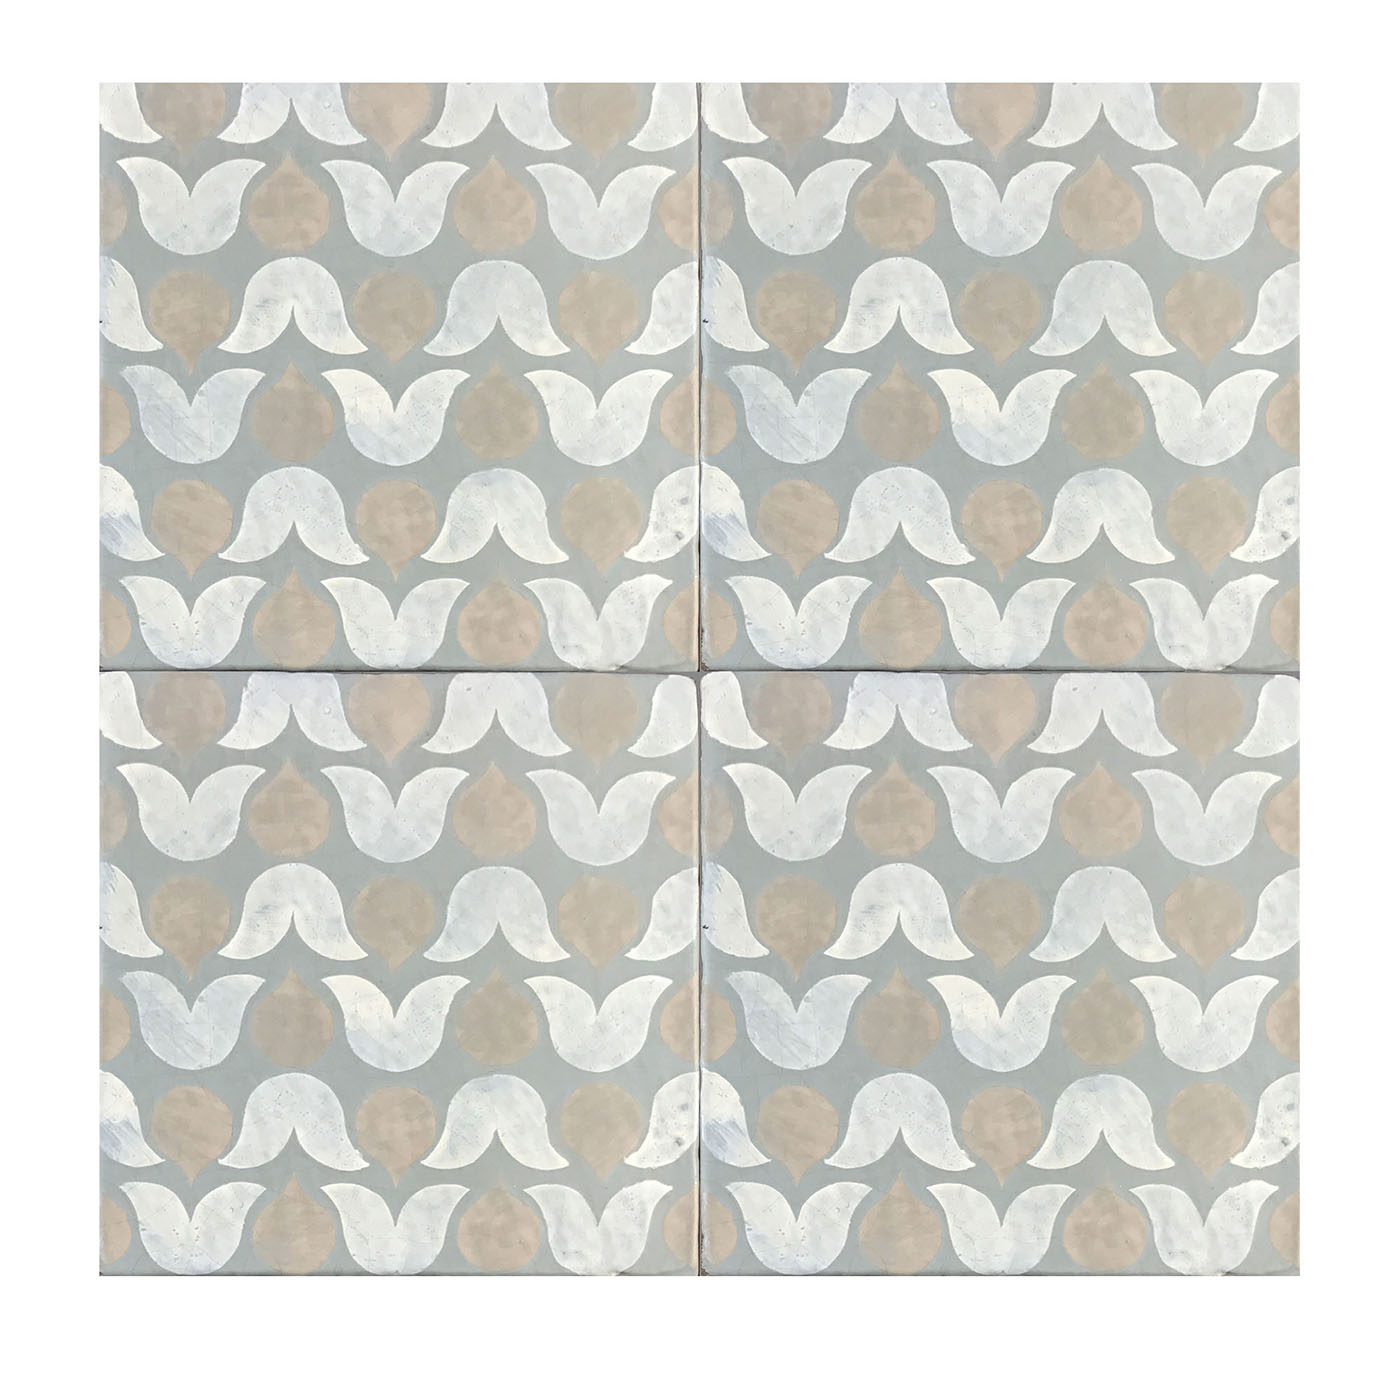 Daamè Set of 25 Square Gray Tiles #2 - Main view